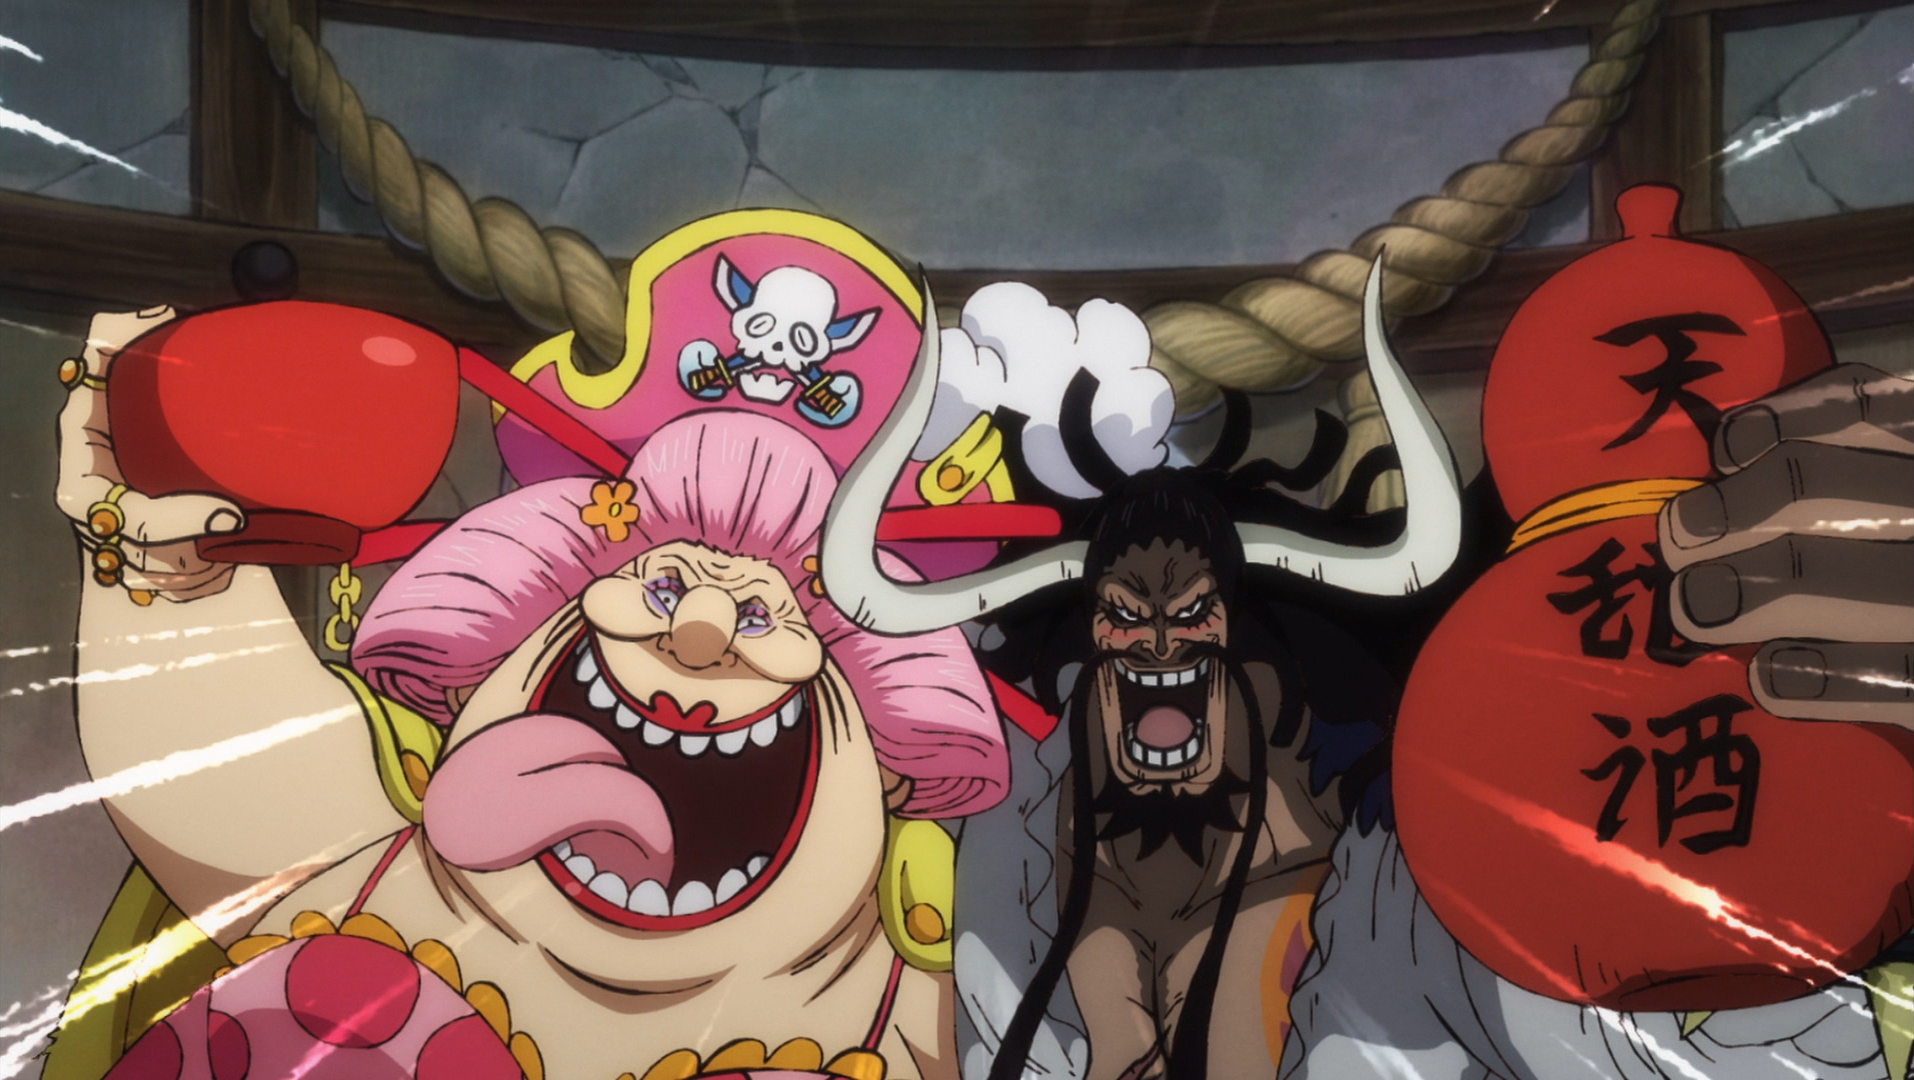 Four Emperors One Piece Wiki Fandom